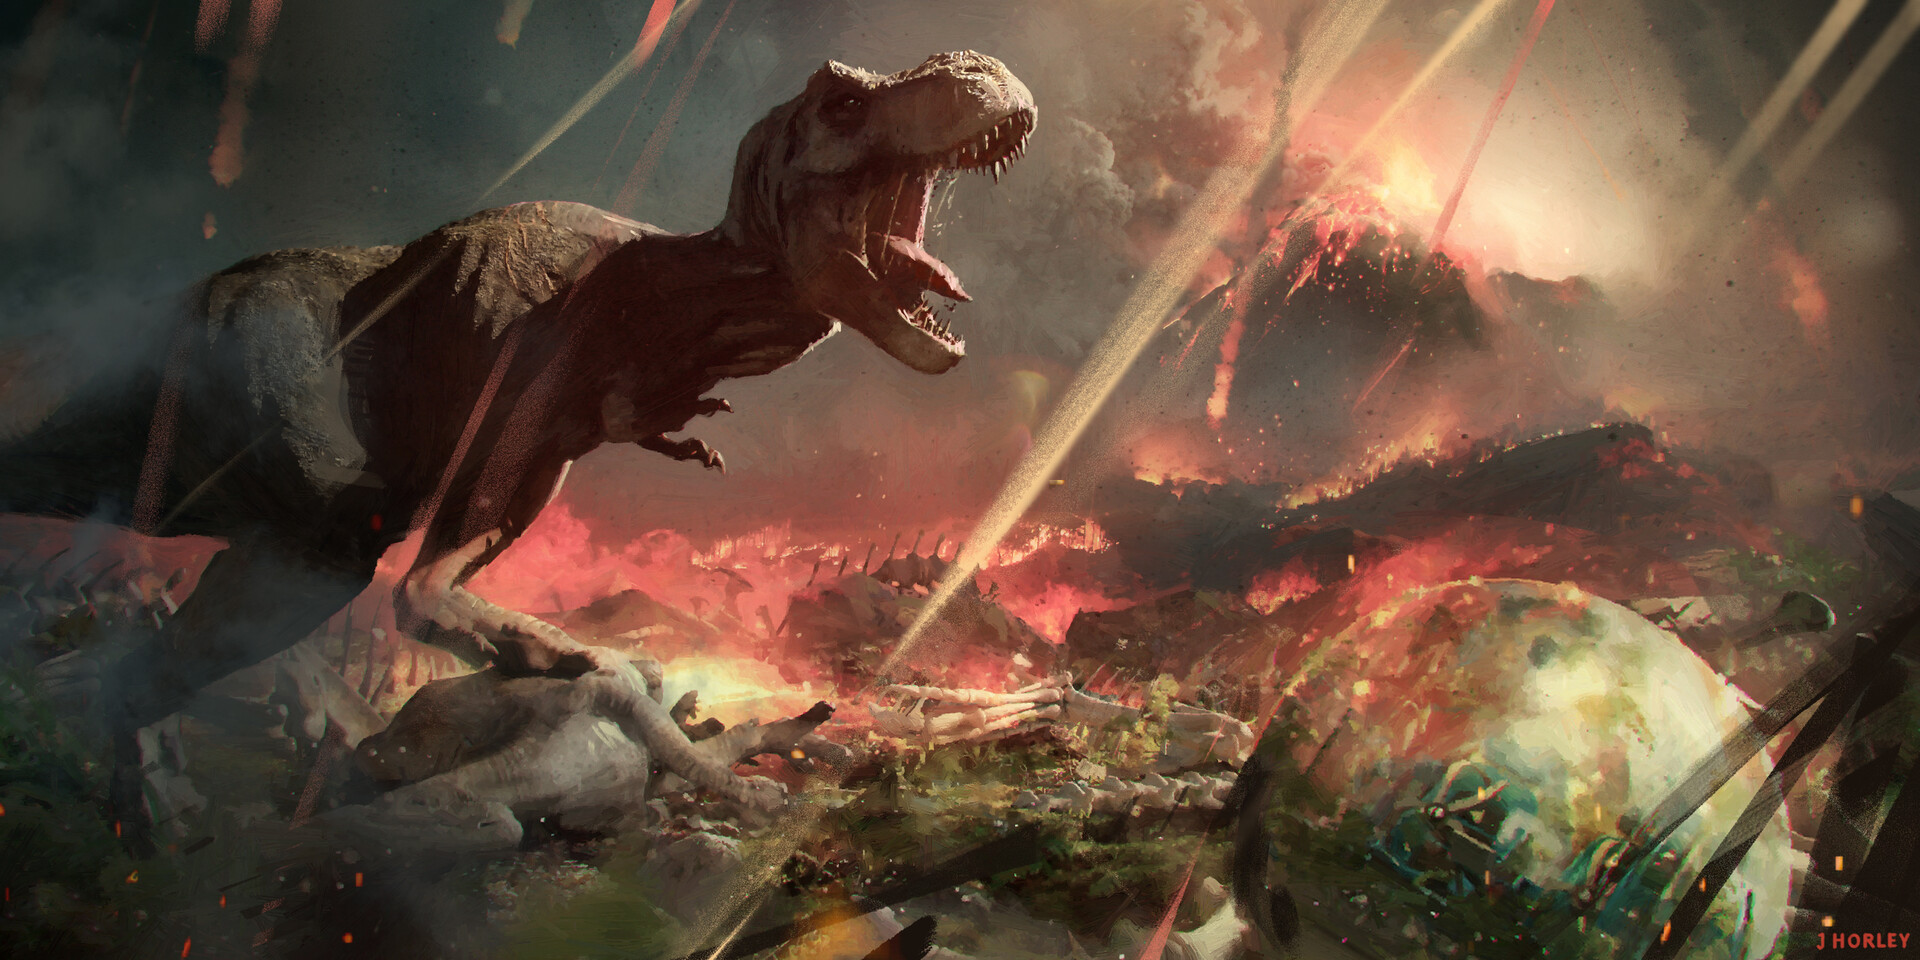 Jurassic World Fallen Kingdom by Jason Horley